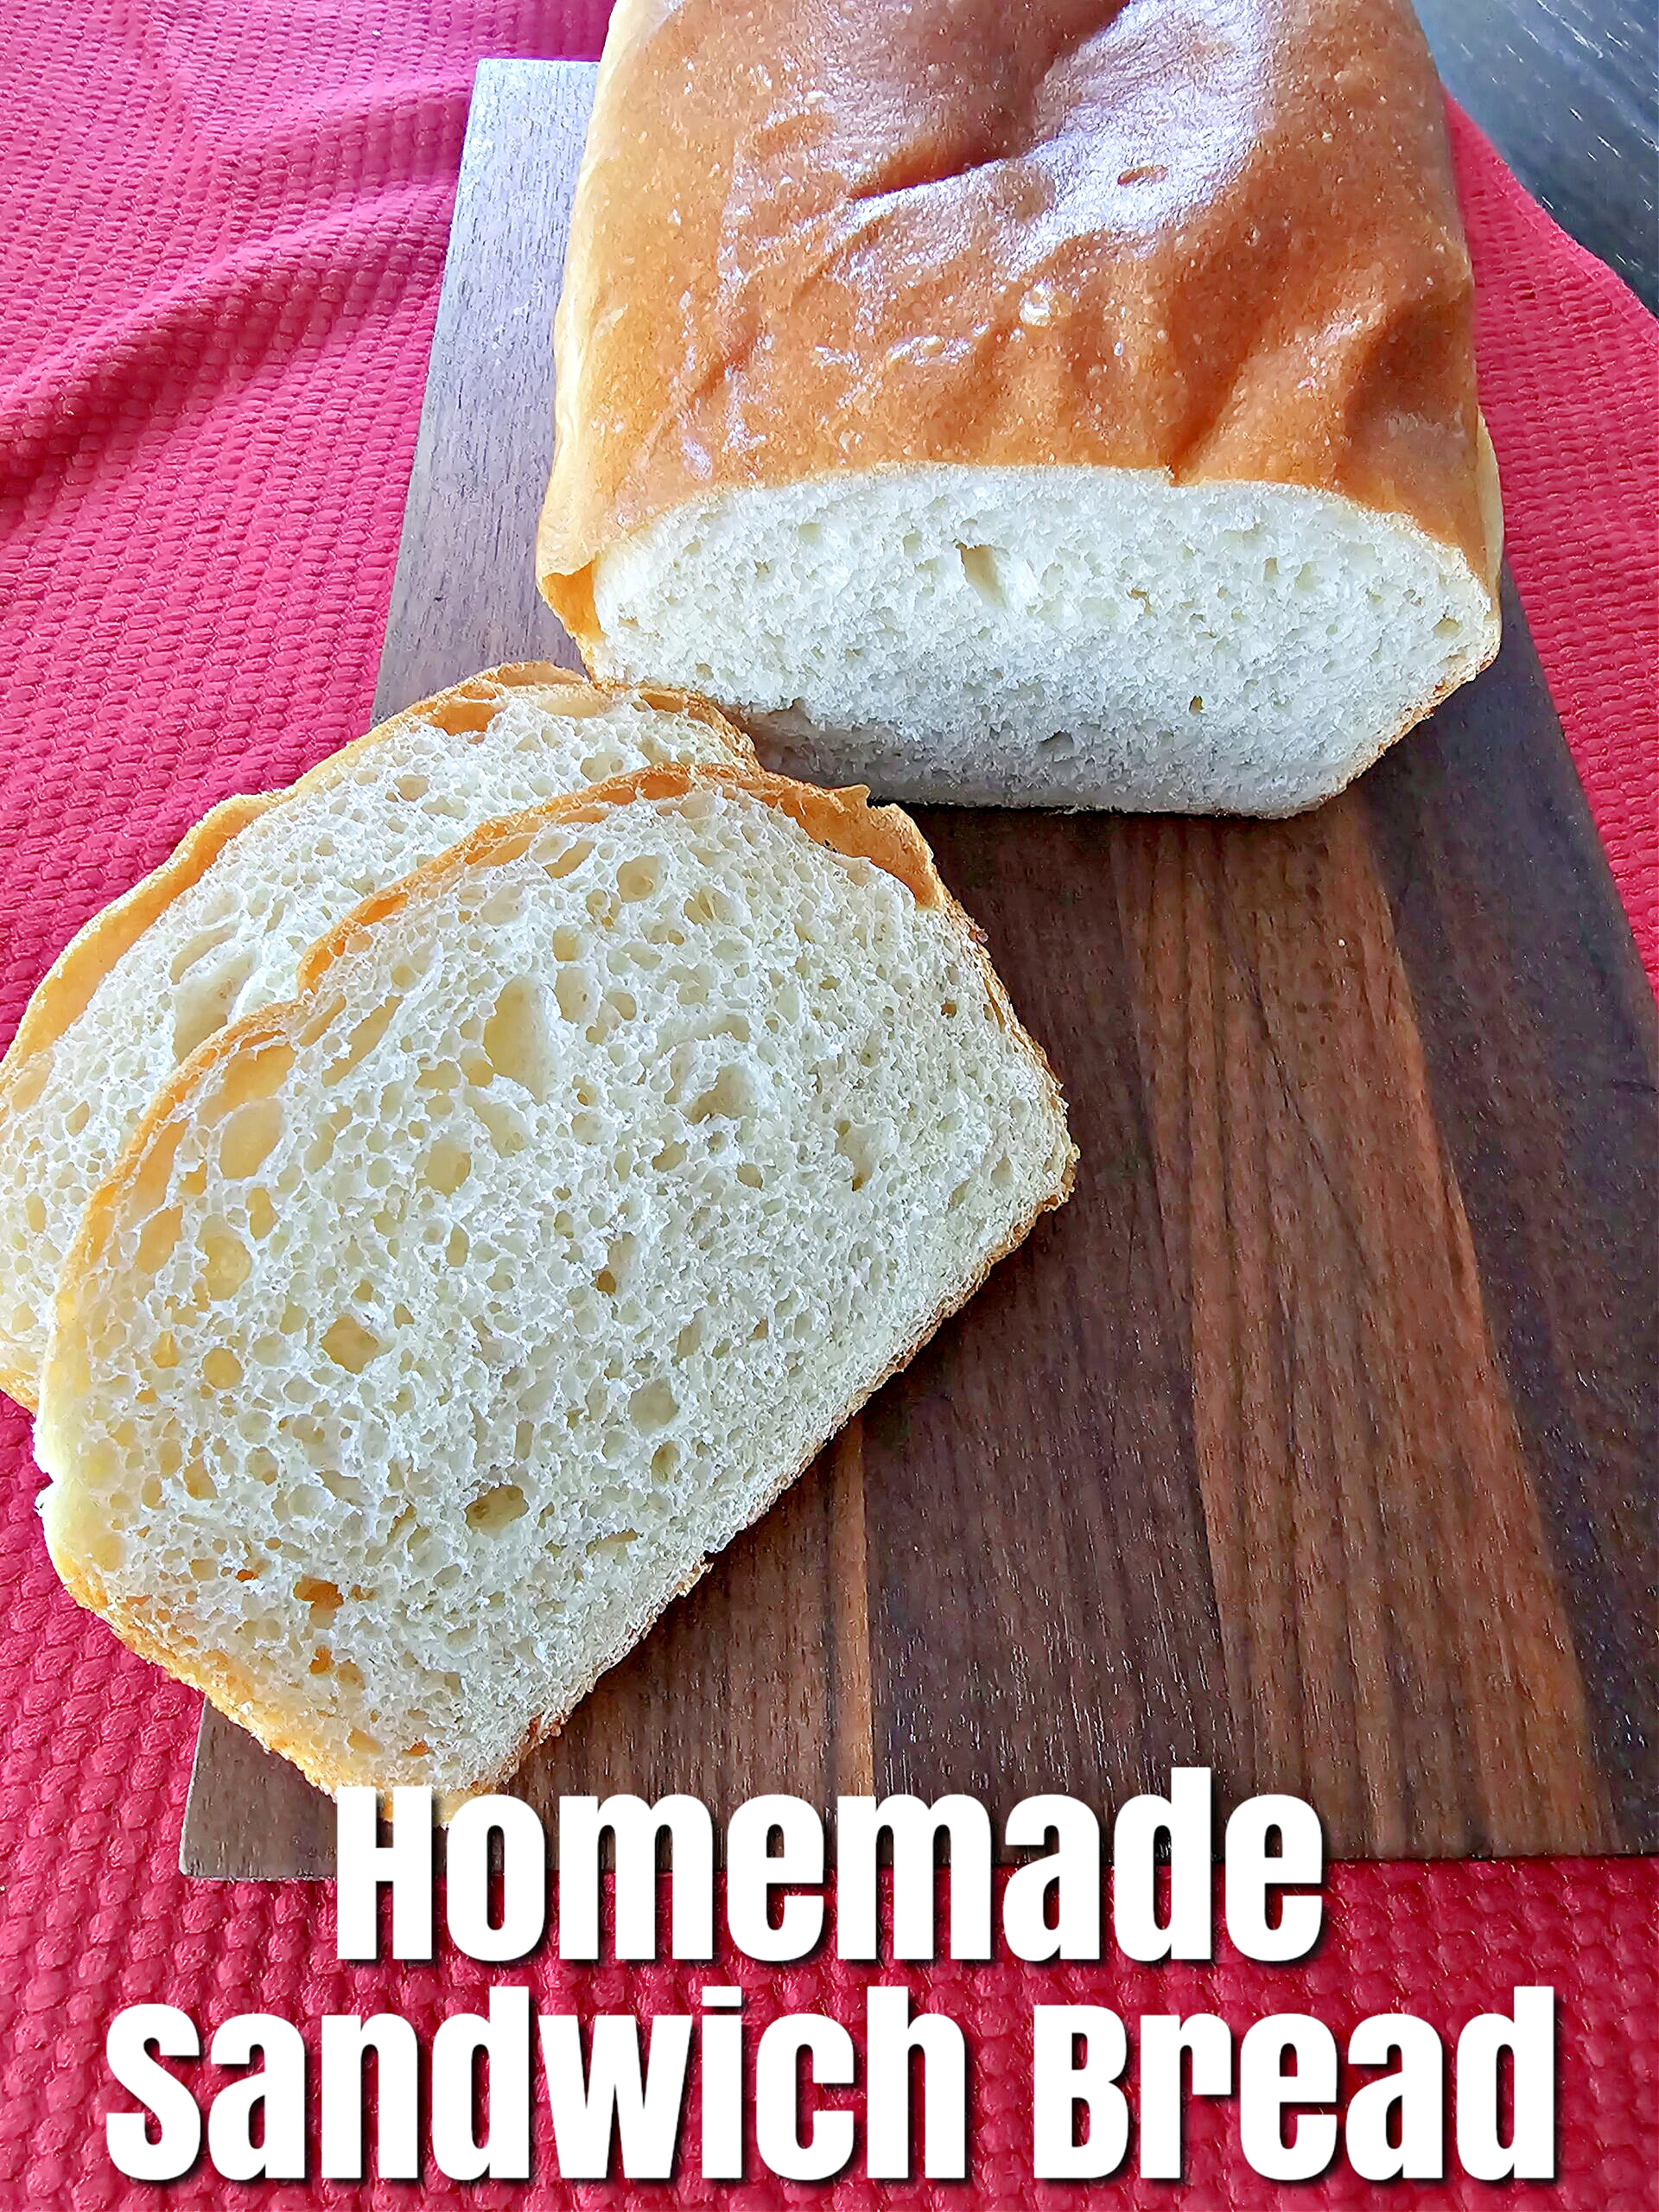 Homemade Sandwich Bread #bread #homemade #sandwichbread #appetizer #sandwiches